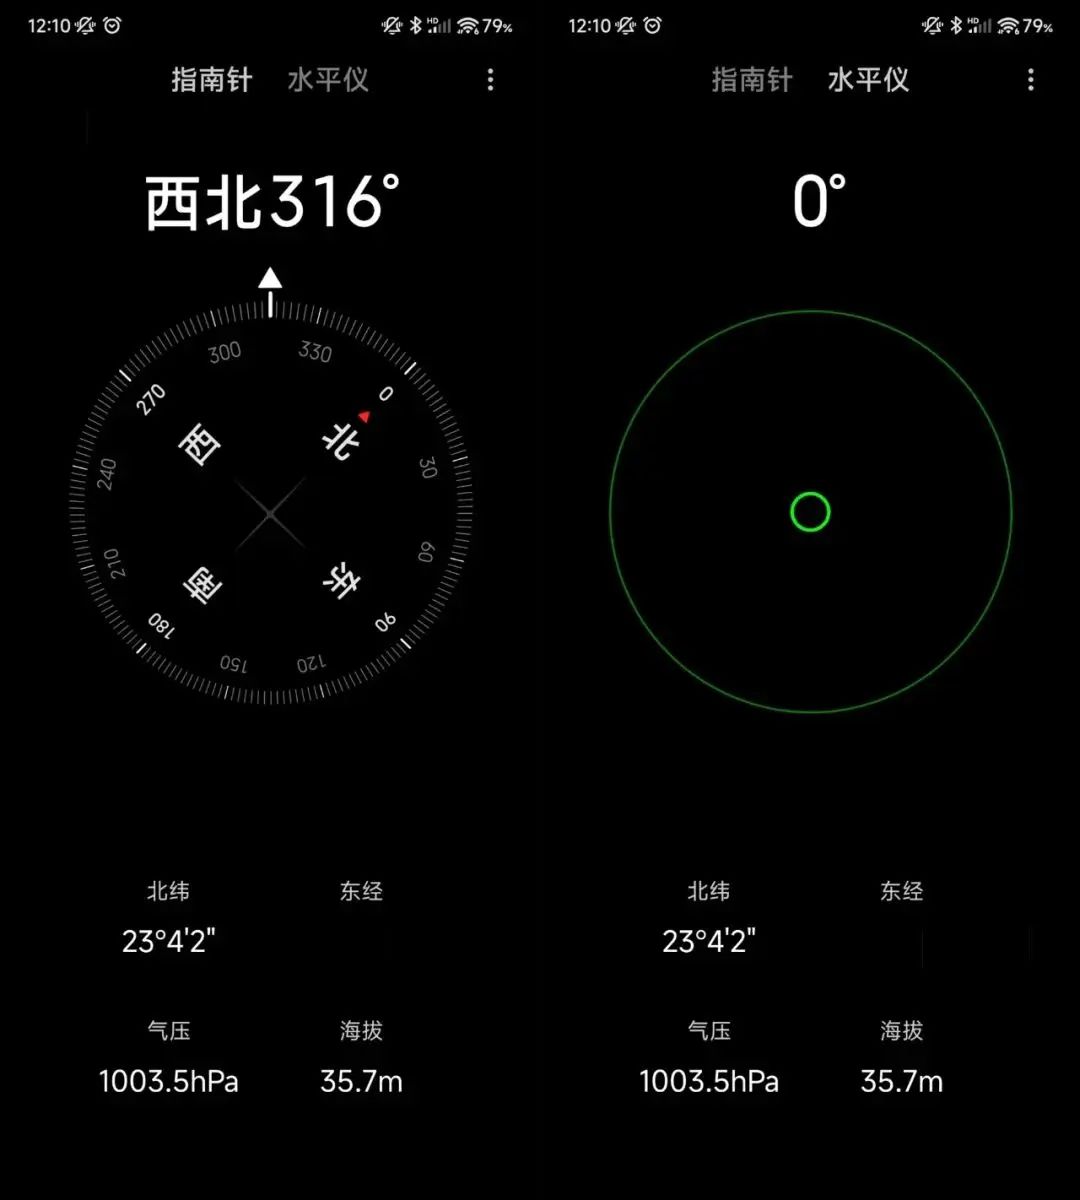 MIUI 14 compass application